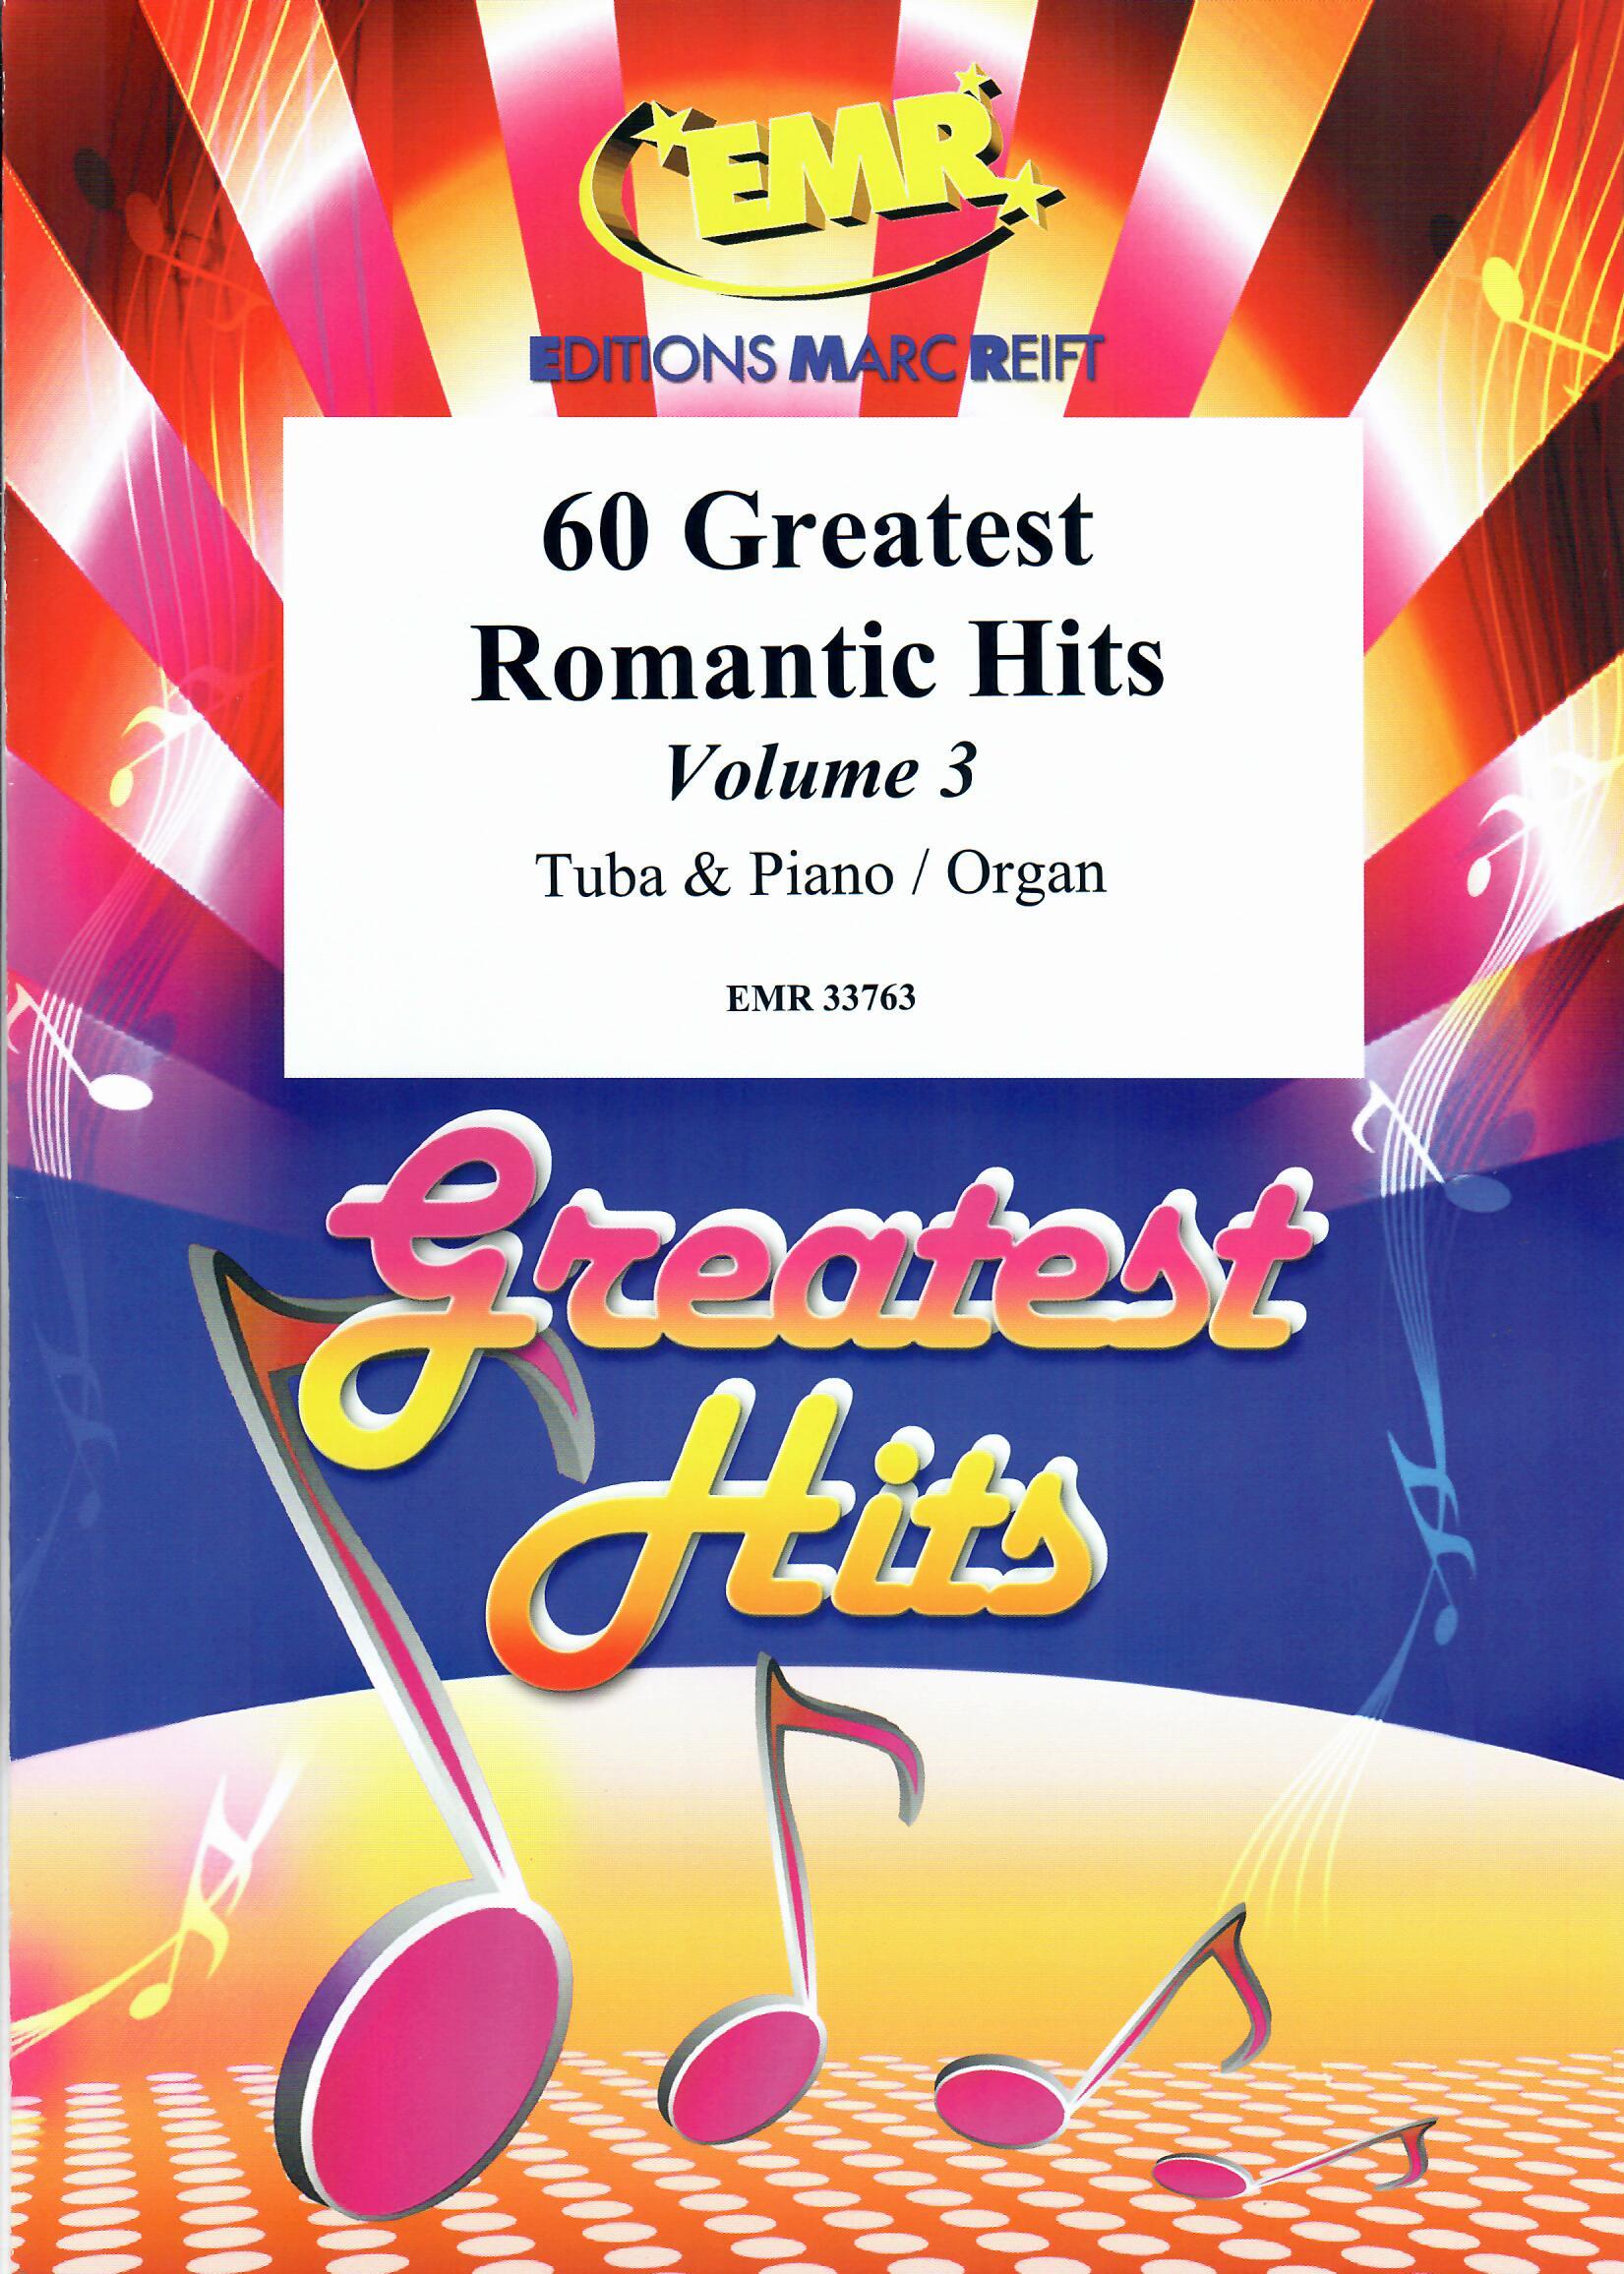 60 GREATEST ROMANTIC HITS VOLUME 3, SOLOS - E♭. Bass